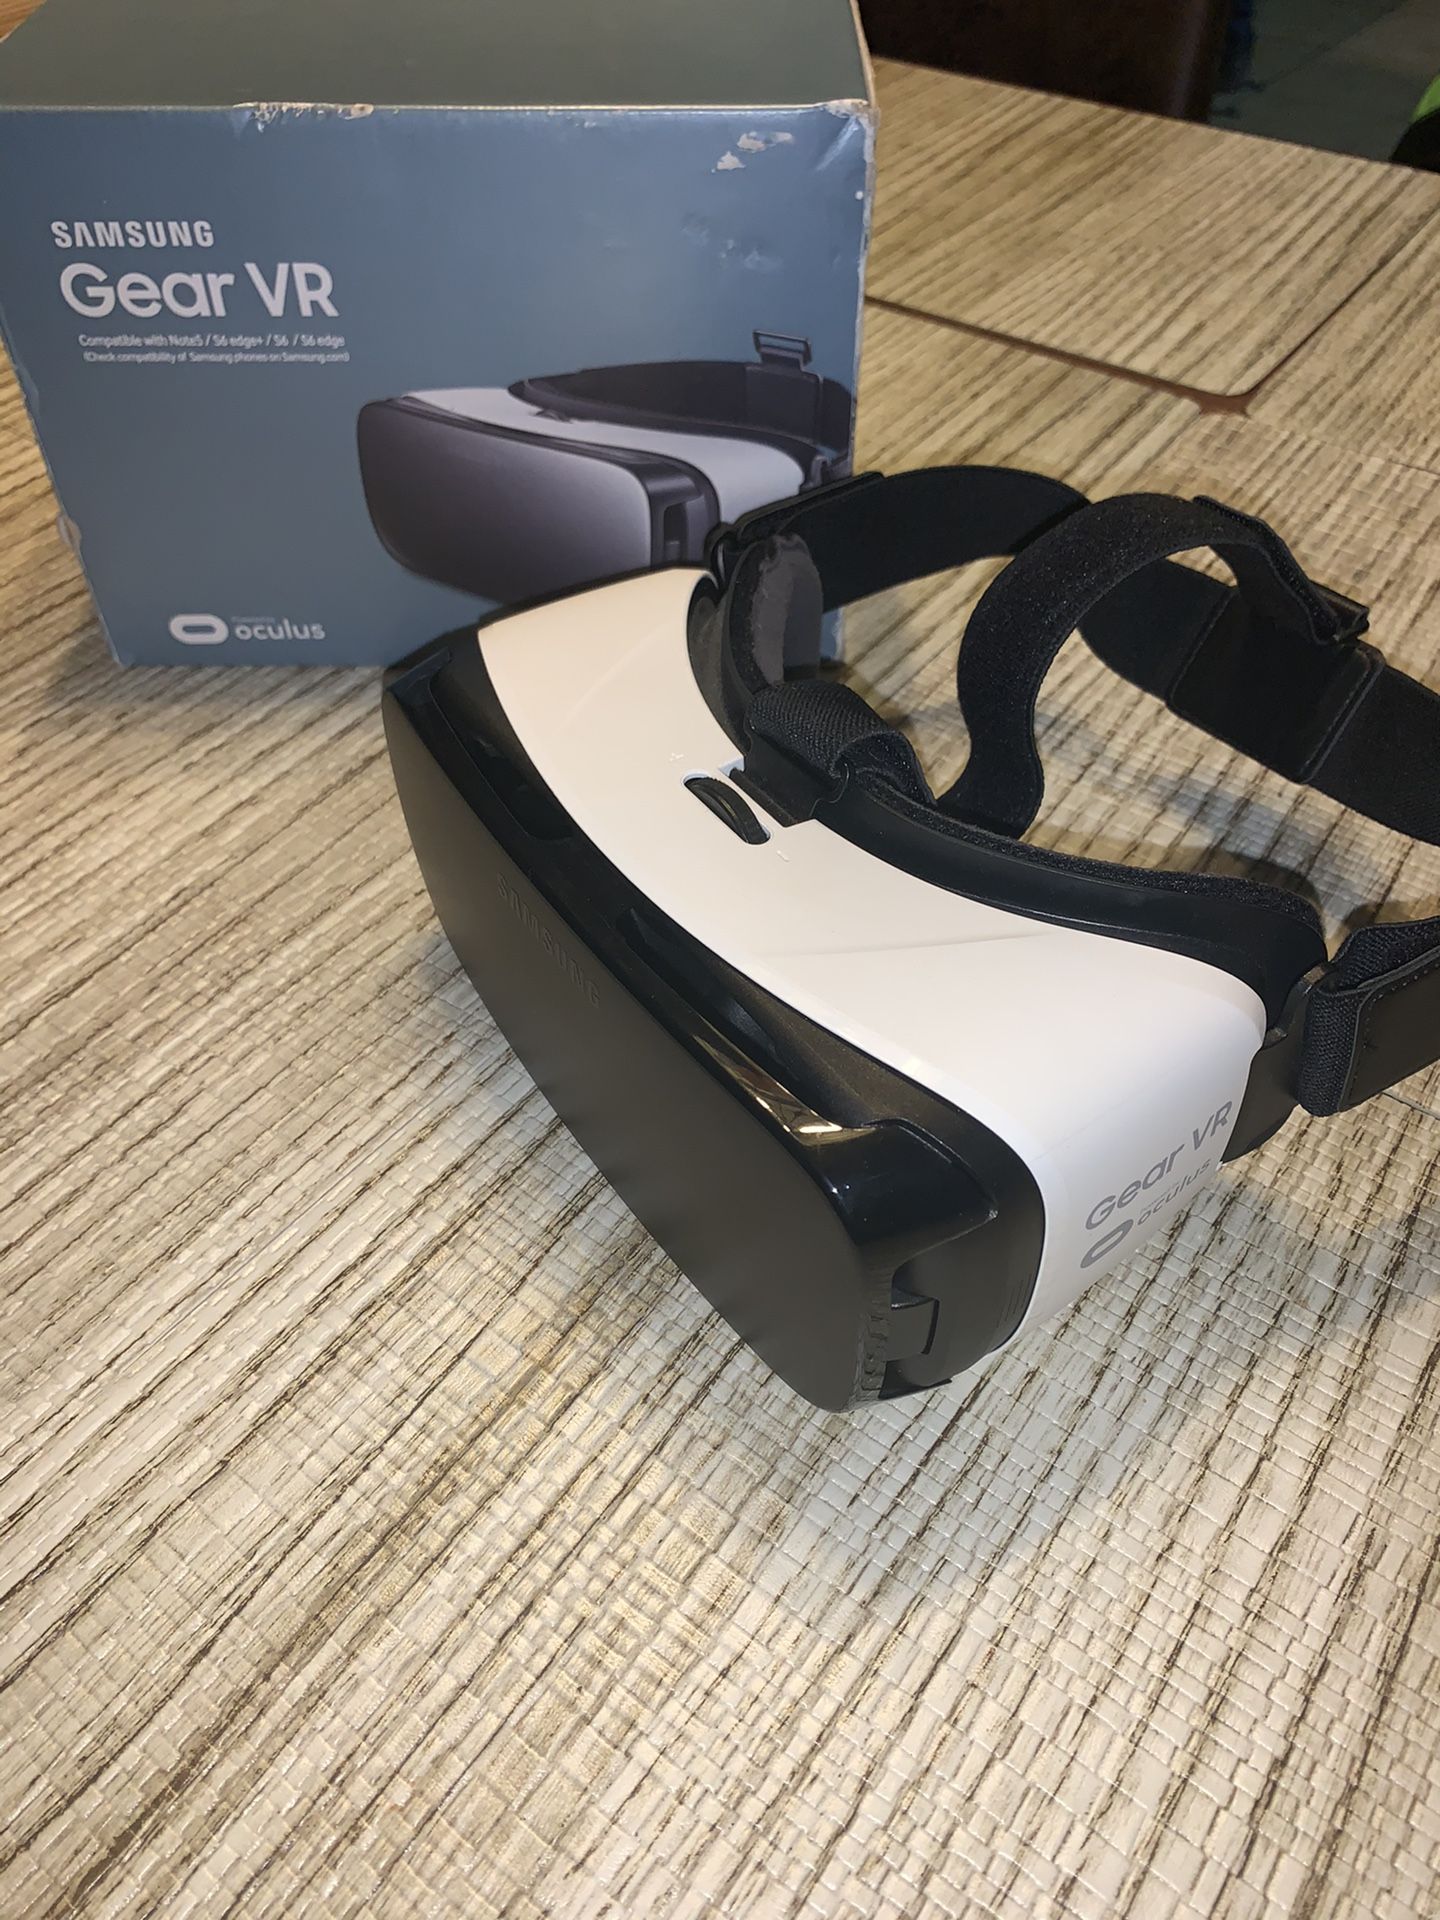 SAMSUNG GEAR VR VIRTUAL REALITY HEADSET